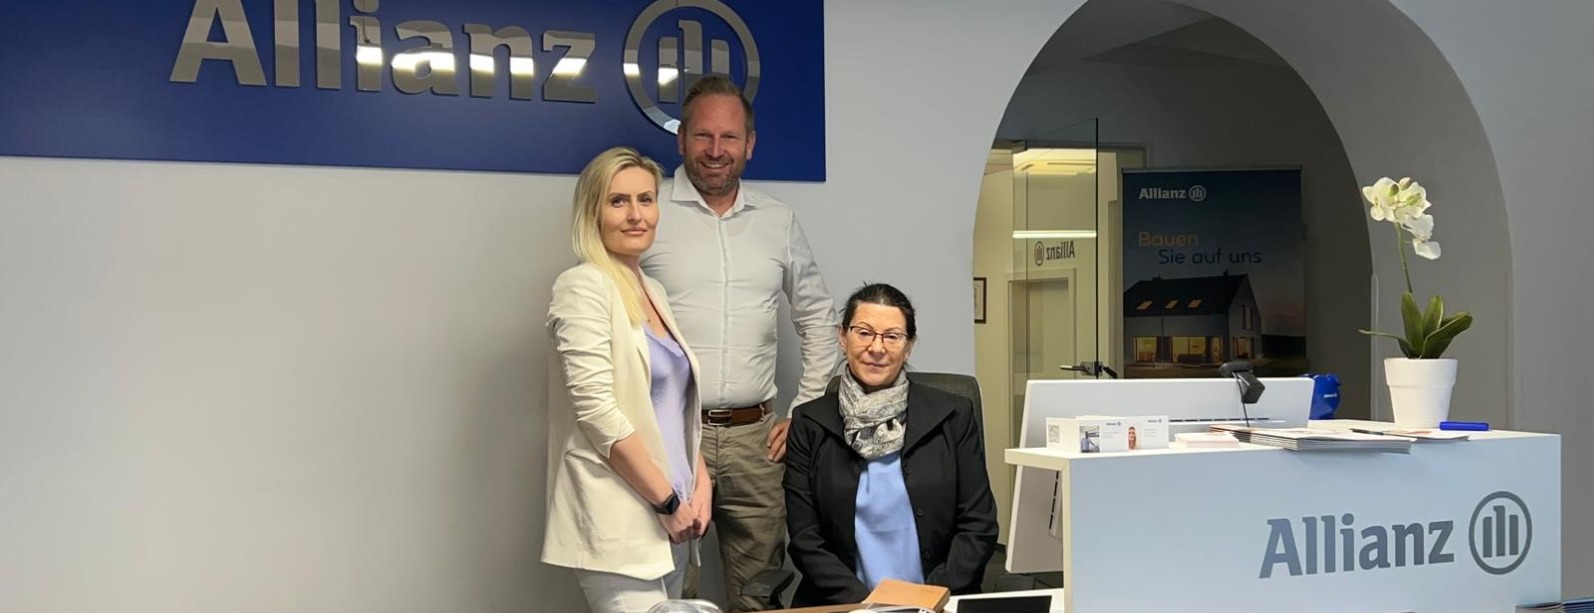 Allianz Versicherung Christian Schmidbauer Waging am See - Baufinanzierungsexperte